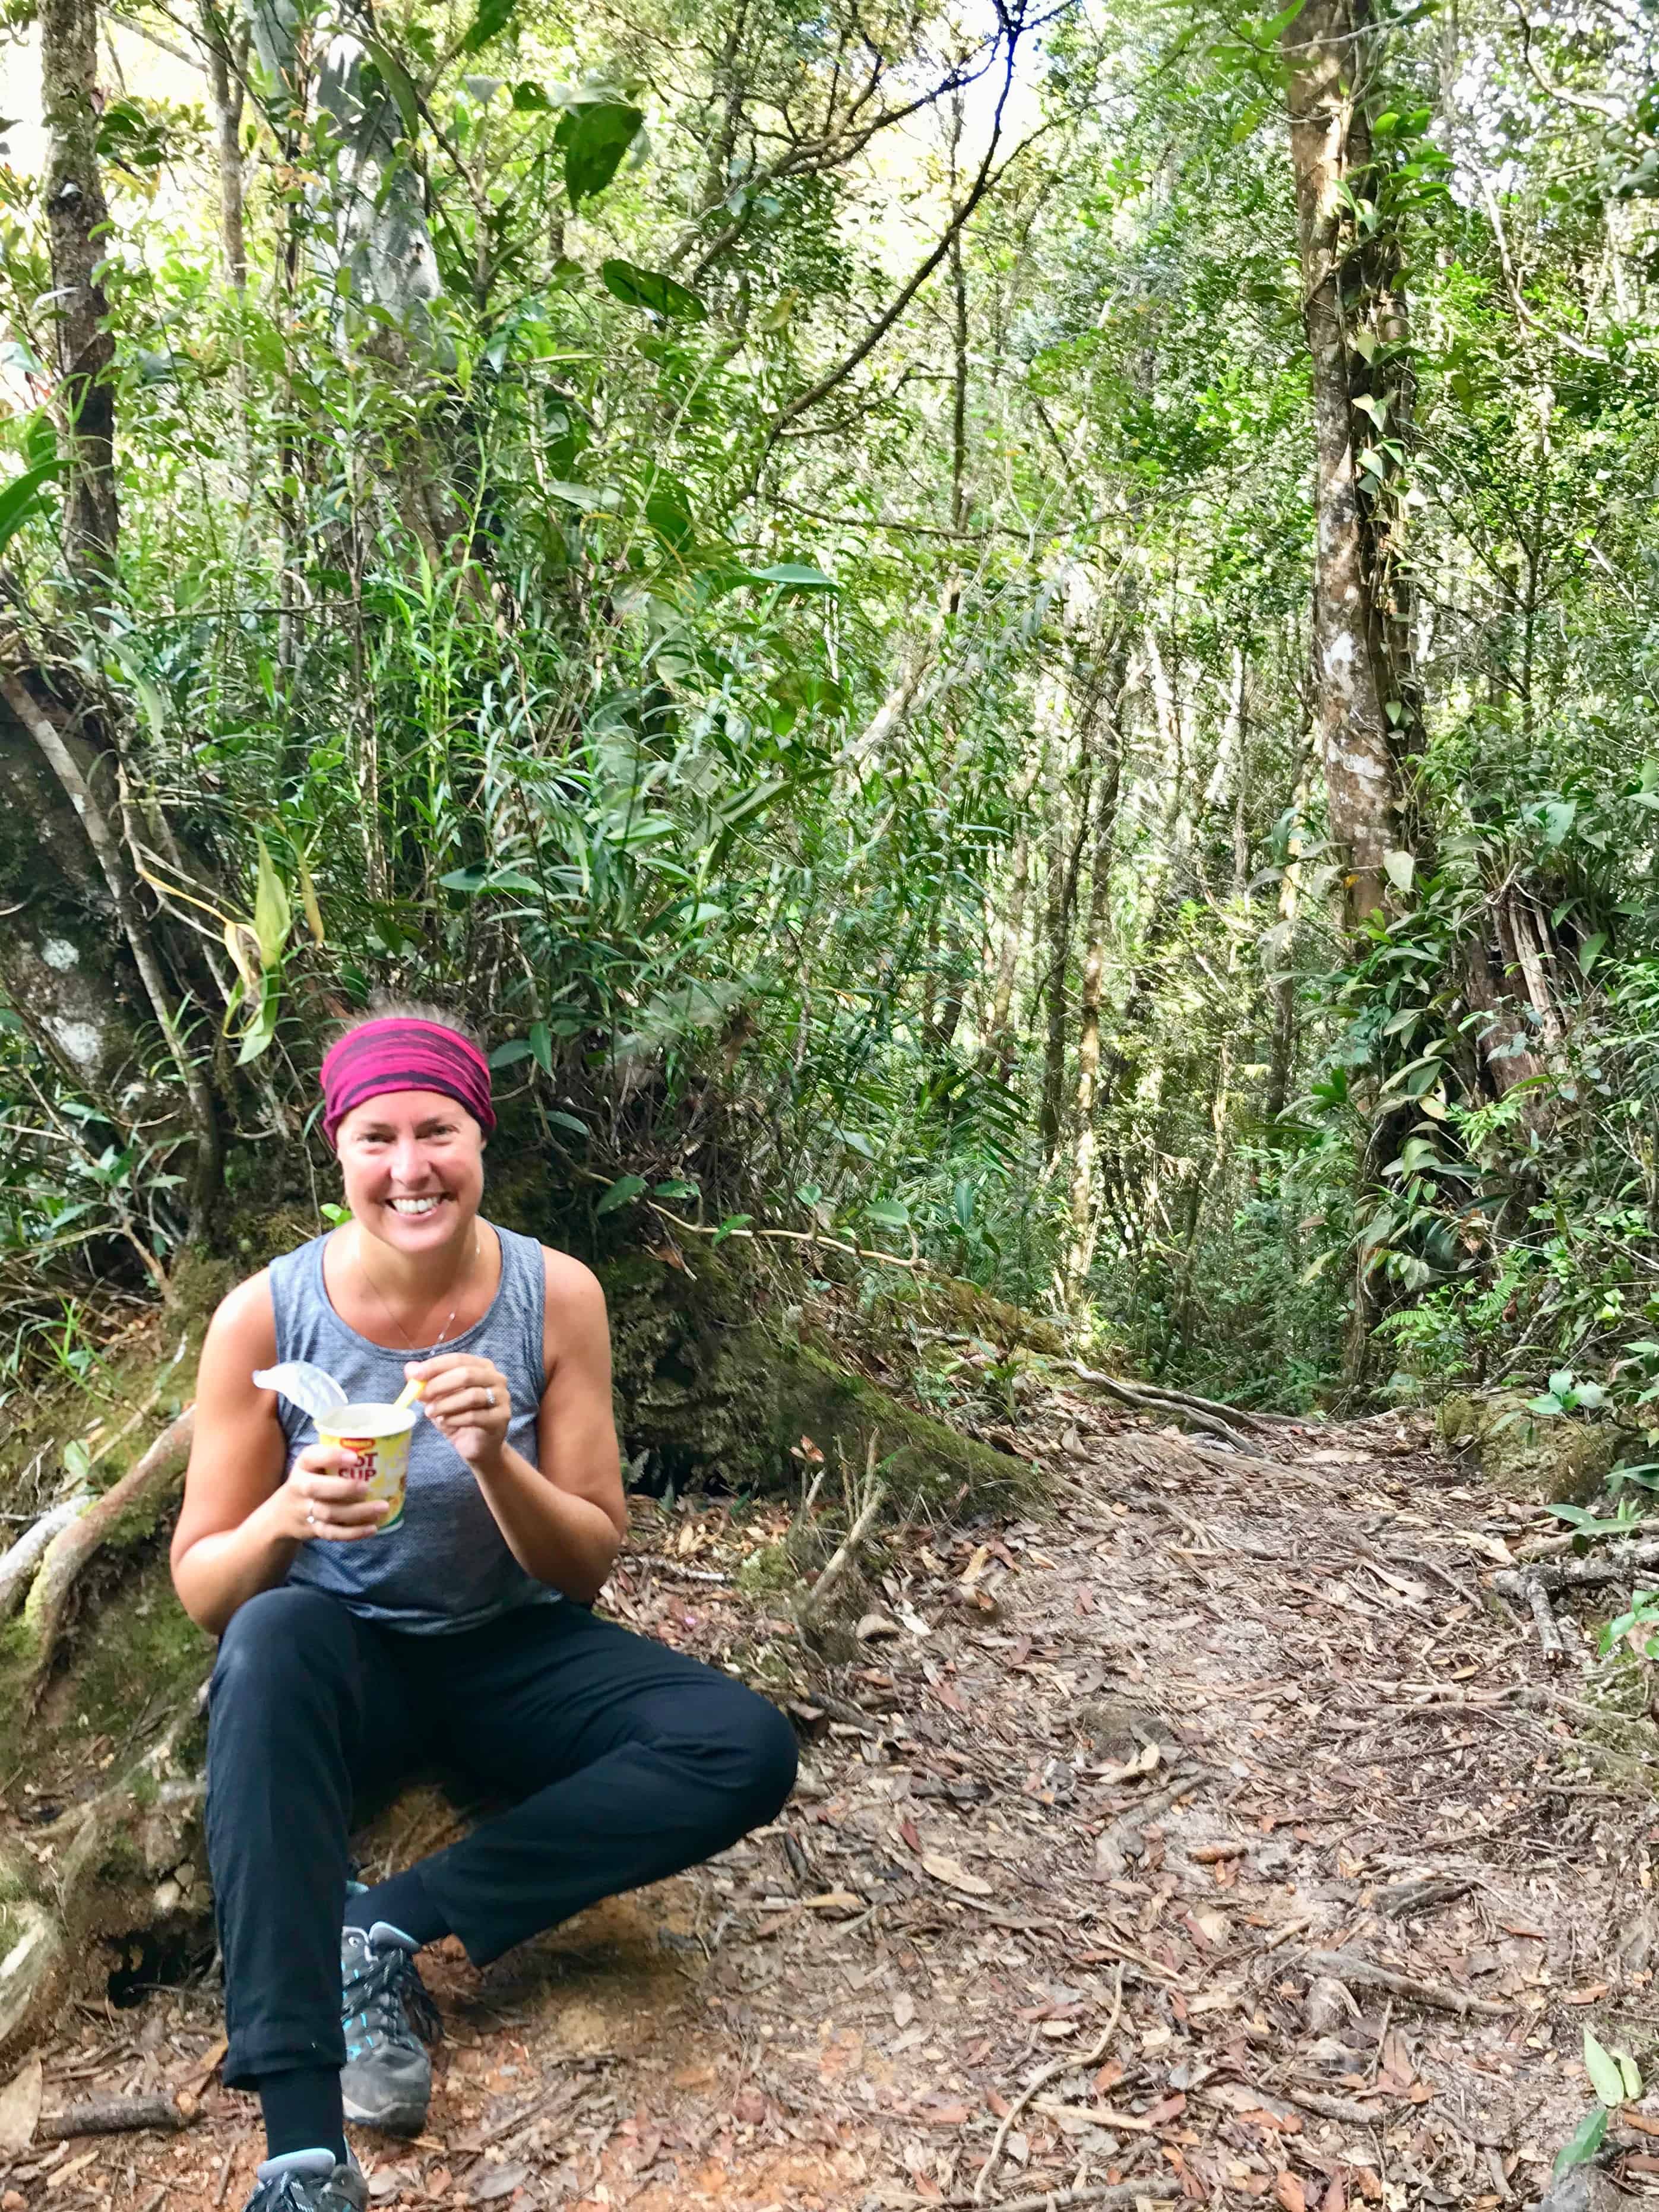 Enjoying a pot noodle lunch along Liwagu trail with views of mount Kinabalu